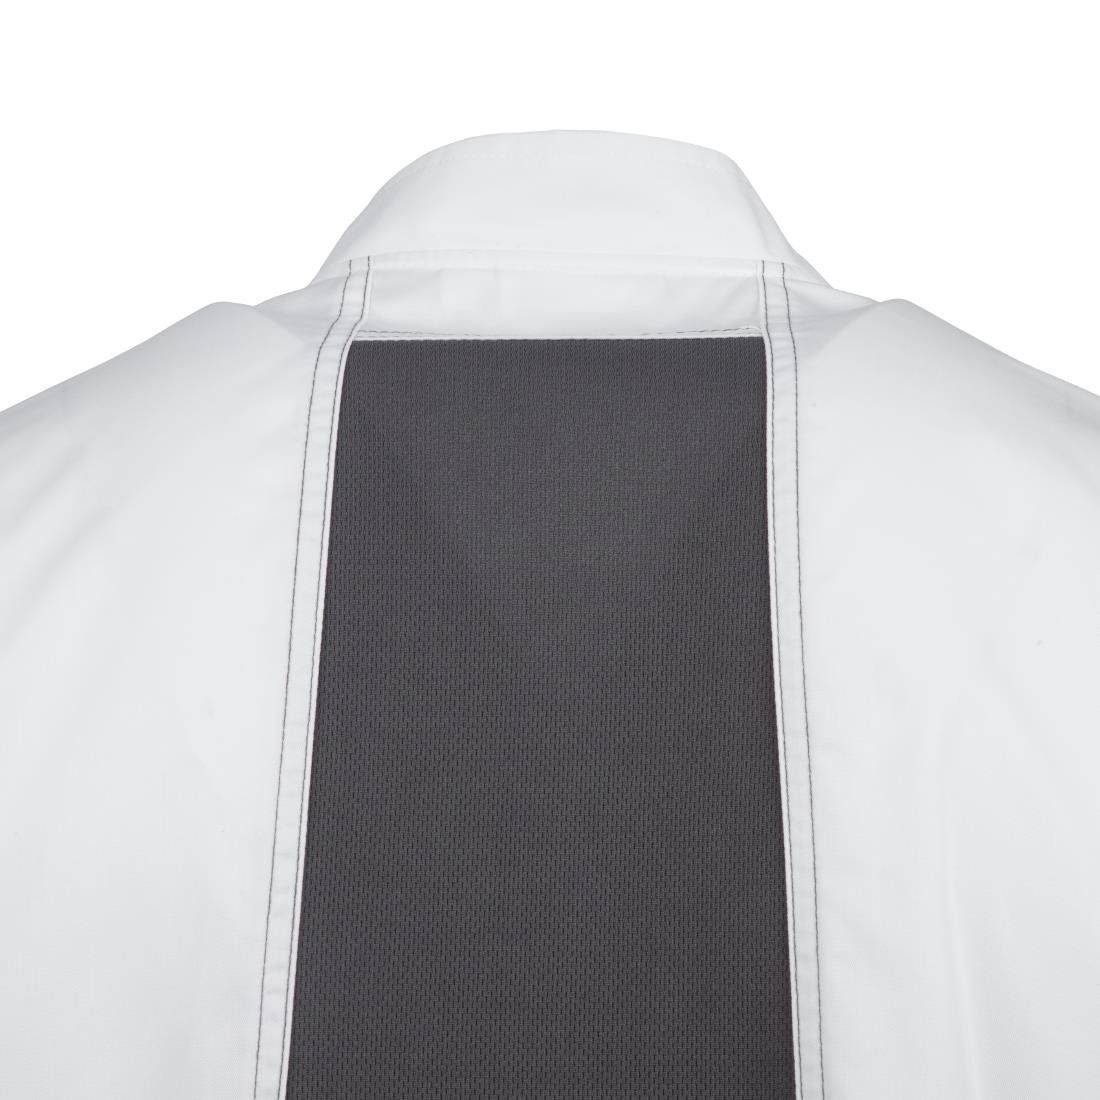 B205-XL Chef Works Valais Signature Series Unisex Chefs Jacket White XL